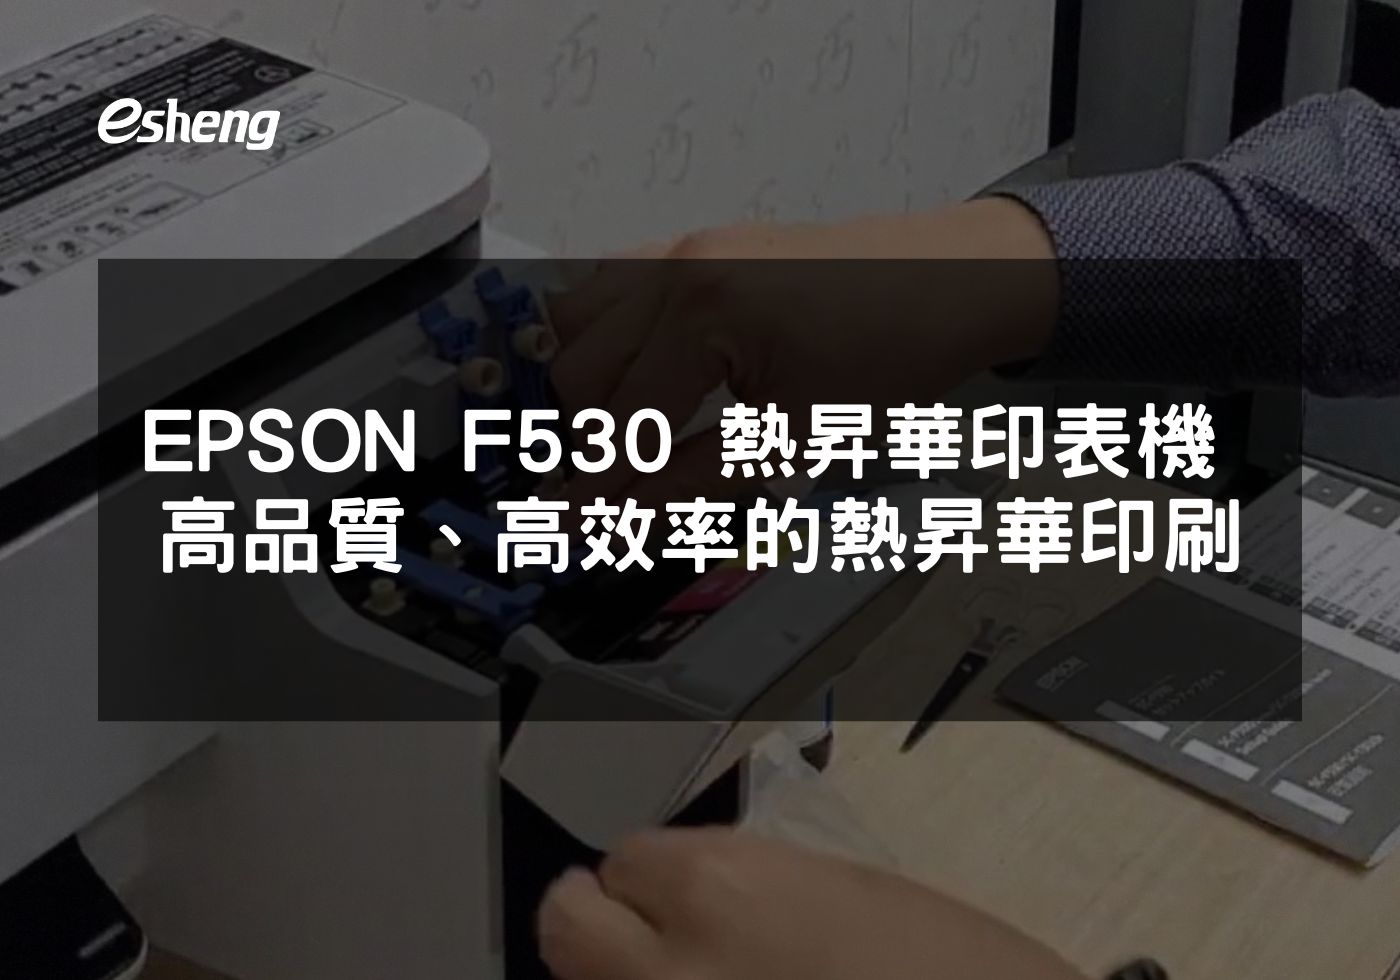 EPSON F530 熱昇華印表機 高品質、高效率的熱昇華印刷